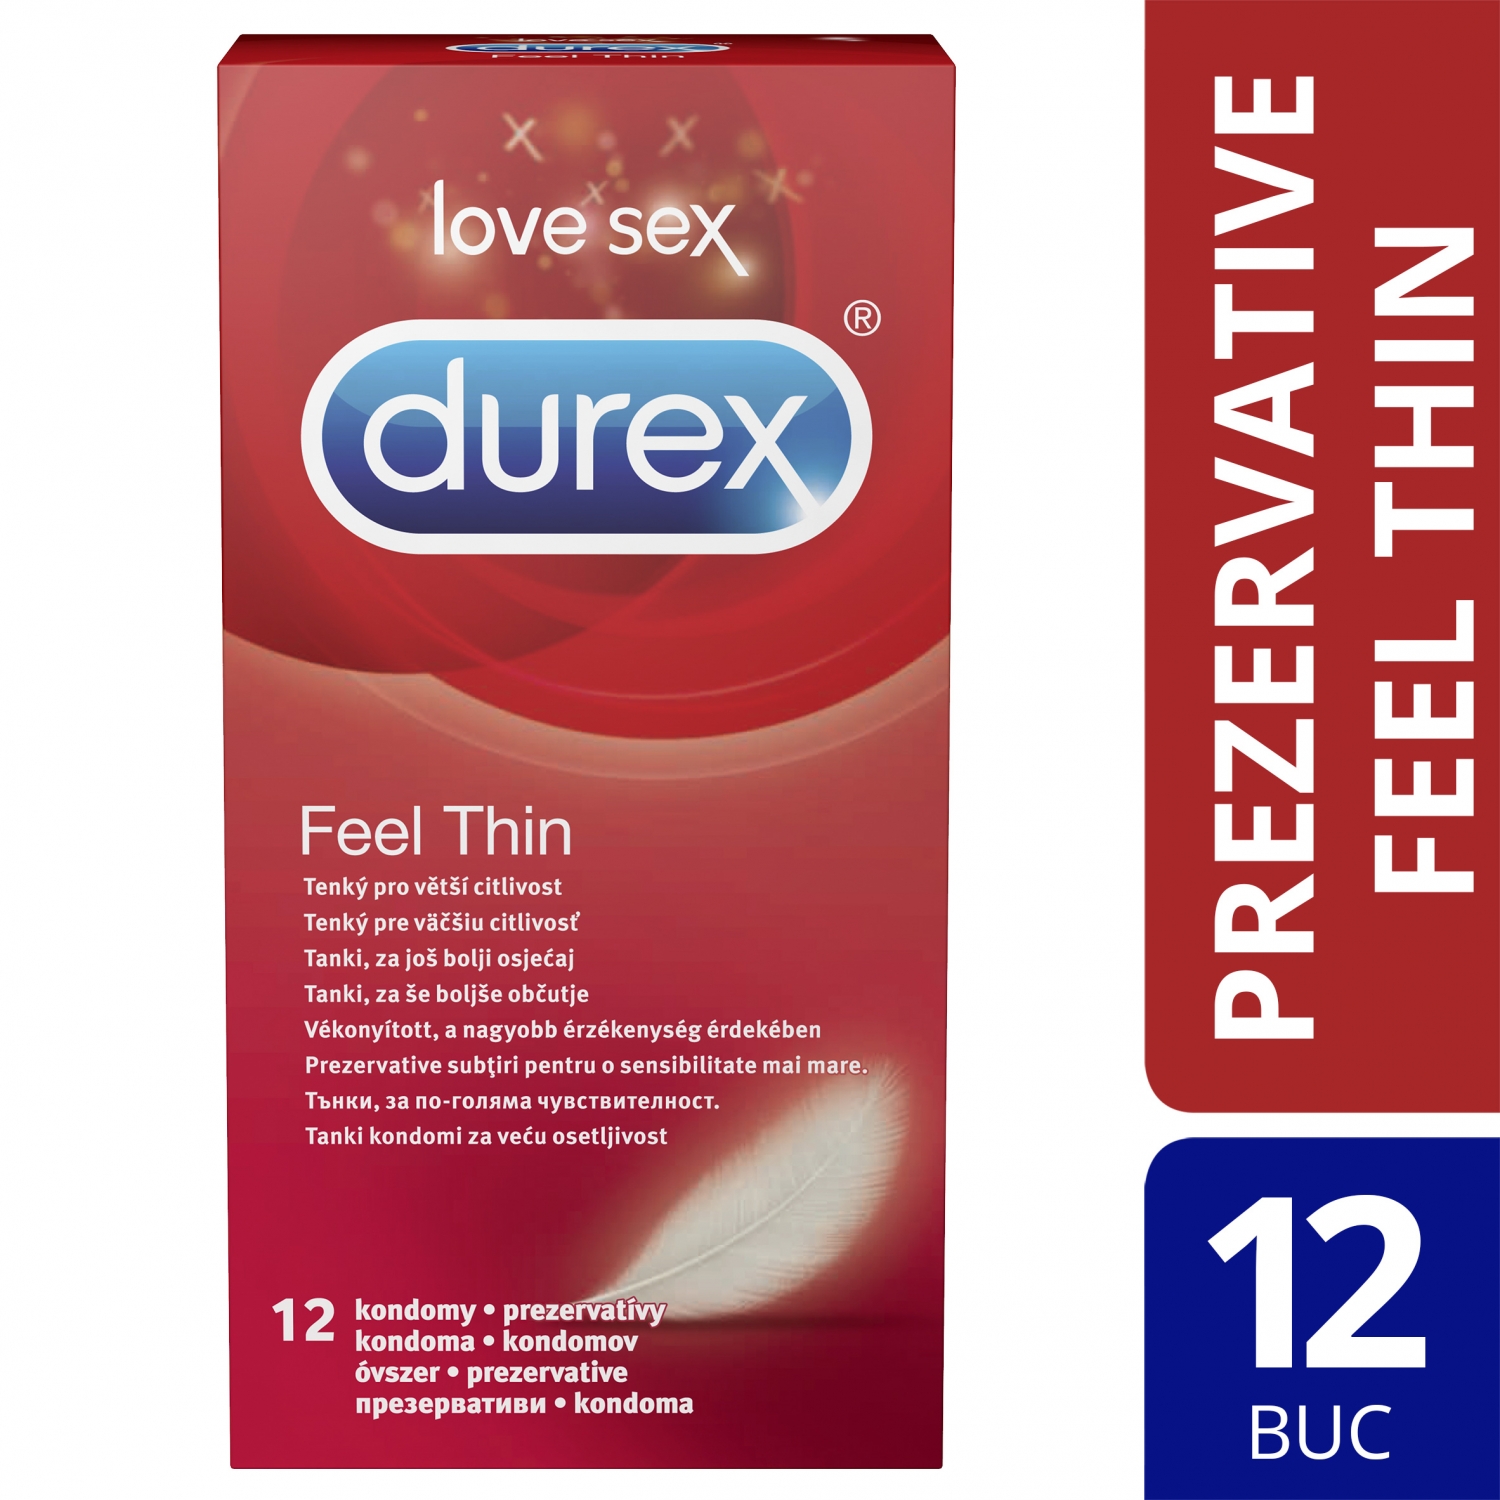 Protecție și lubrefiere - Durex Feel Thin x 12buc, epastila.ro